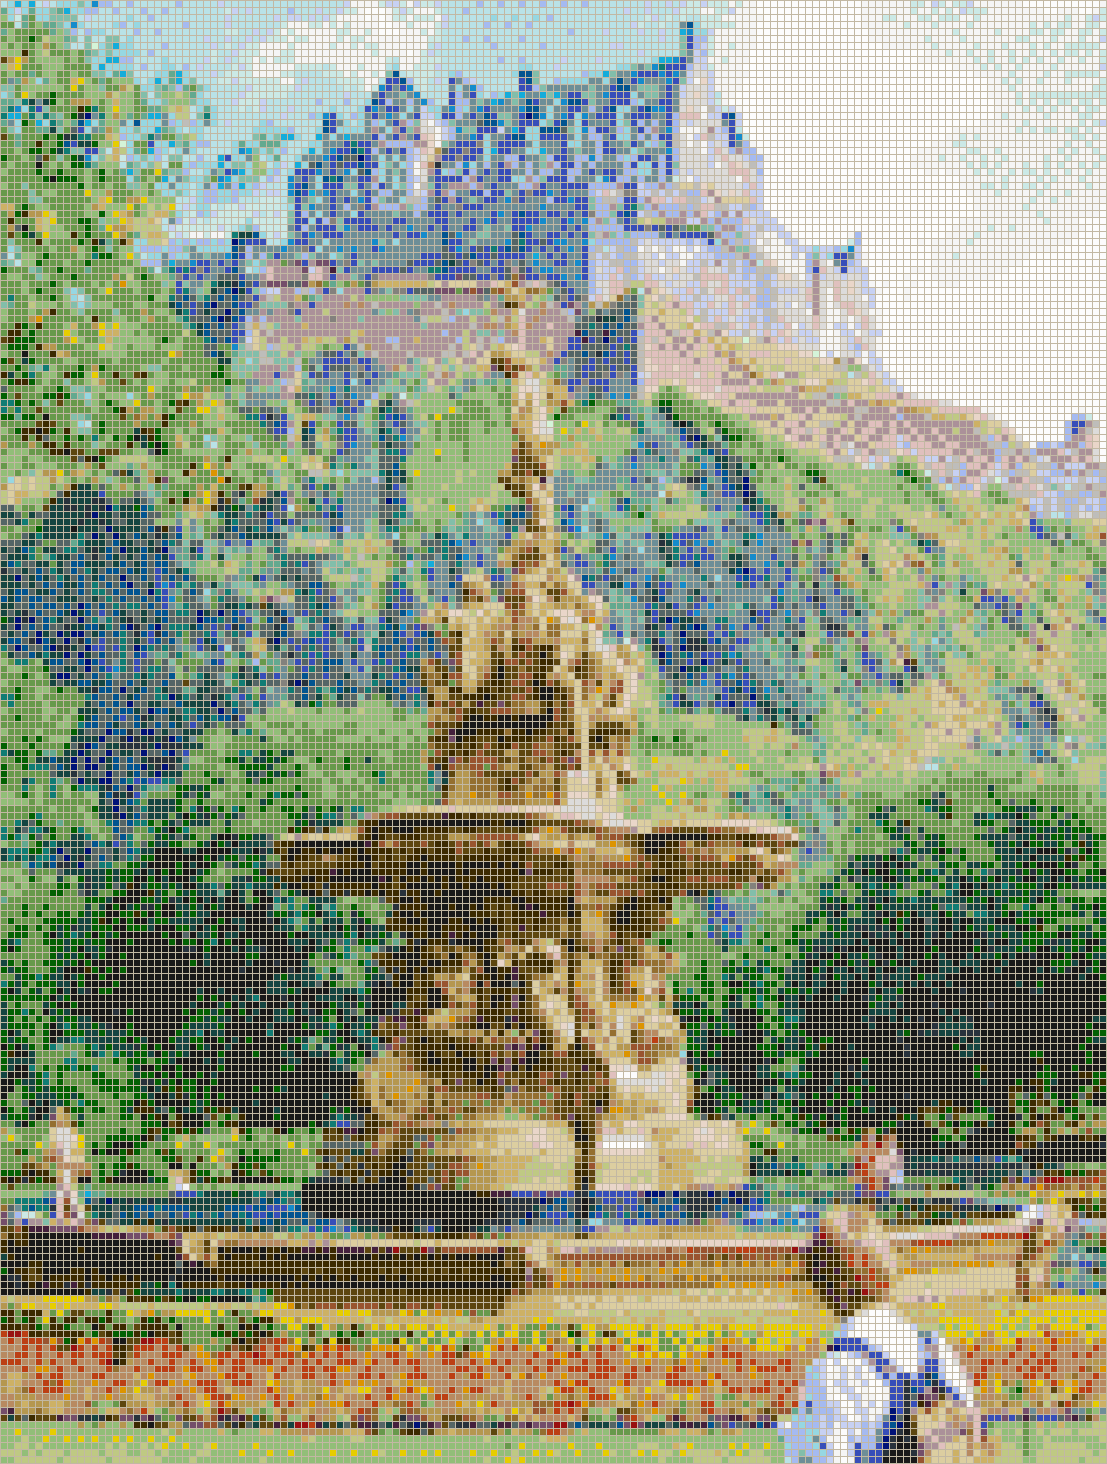 Edinburgh Castle and Fountain - Mosaic Tile Art